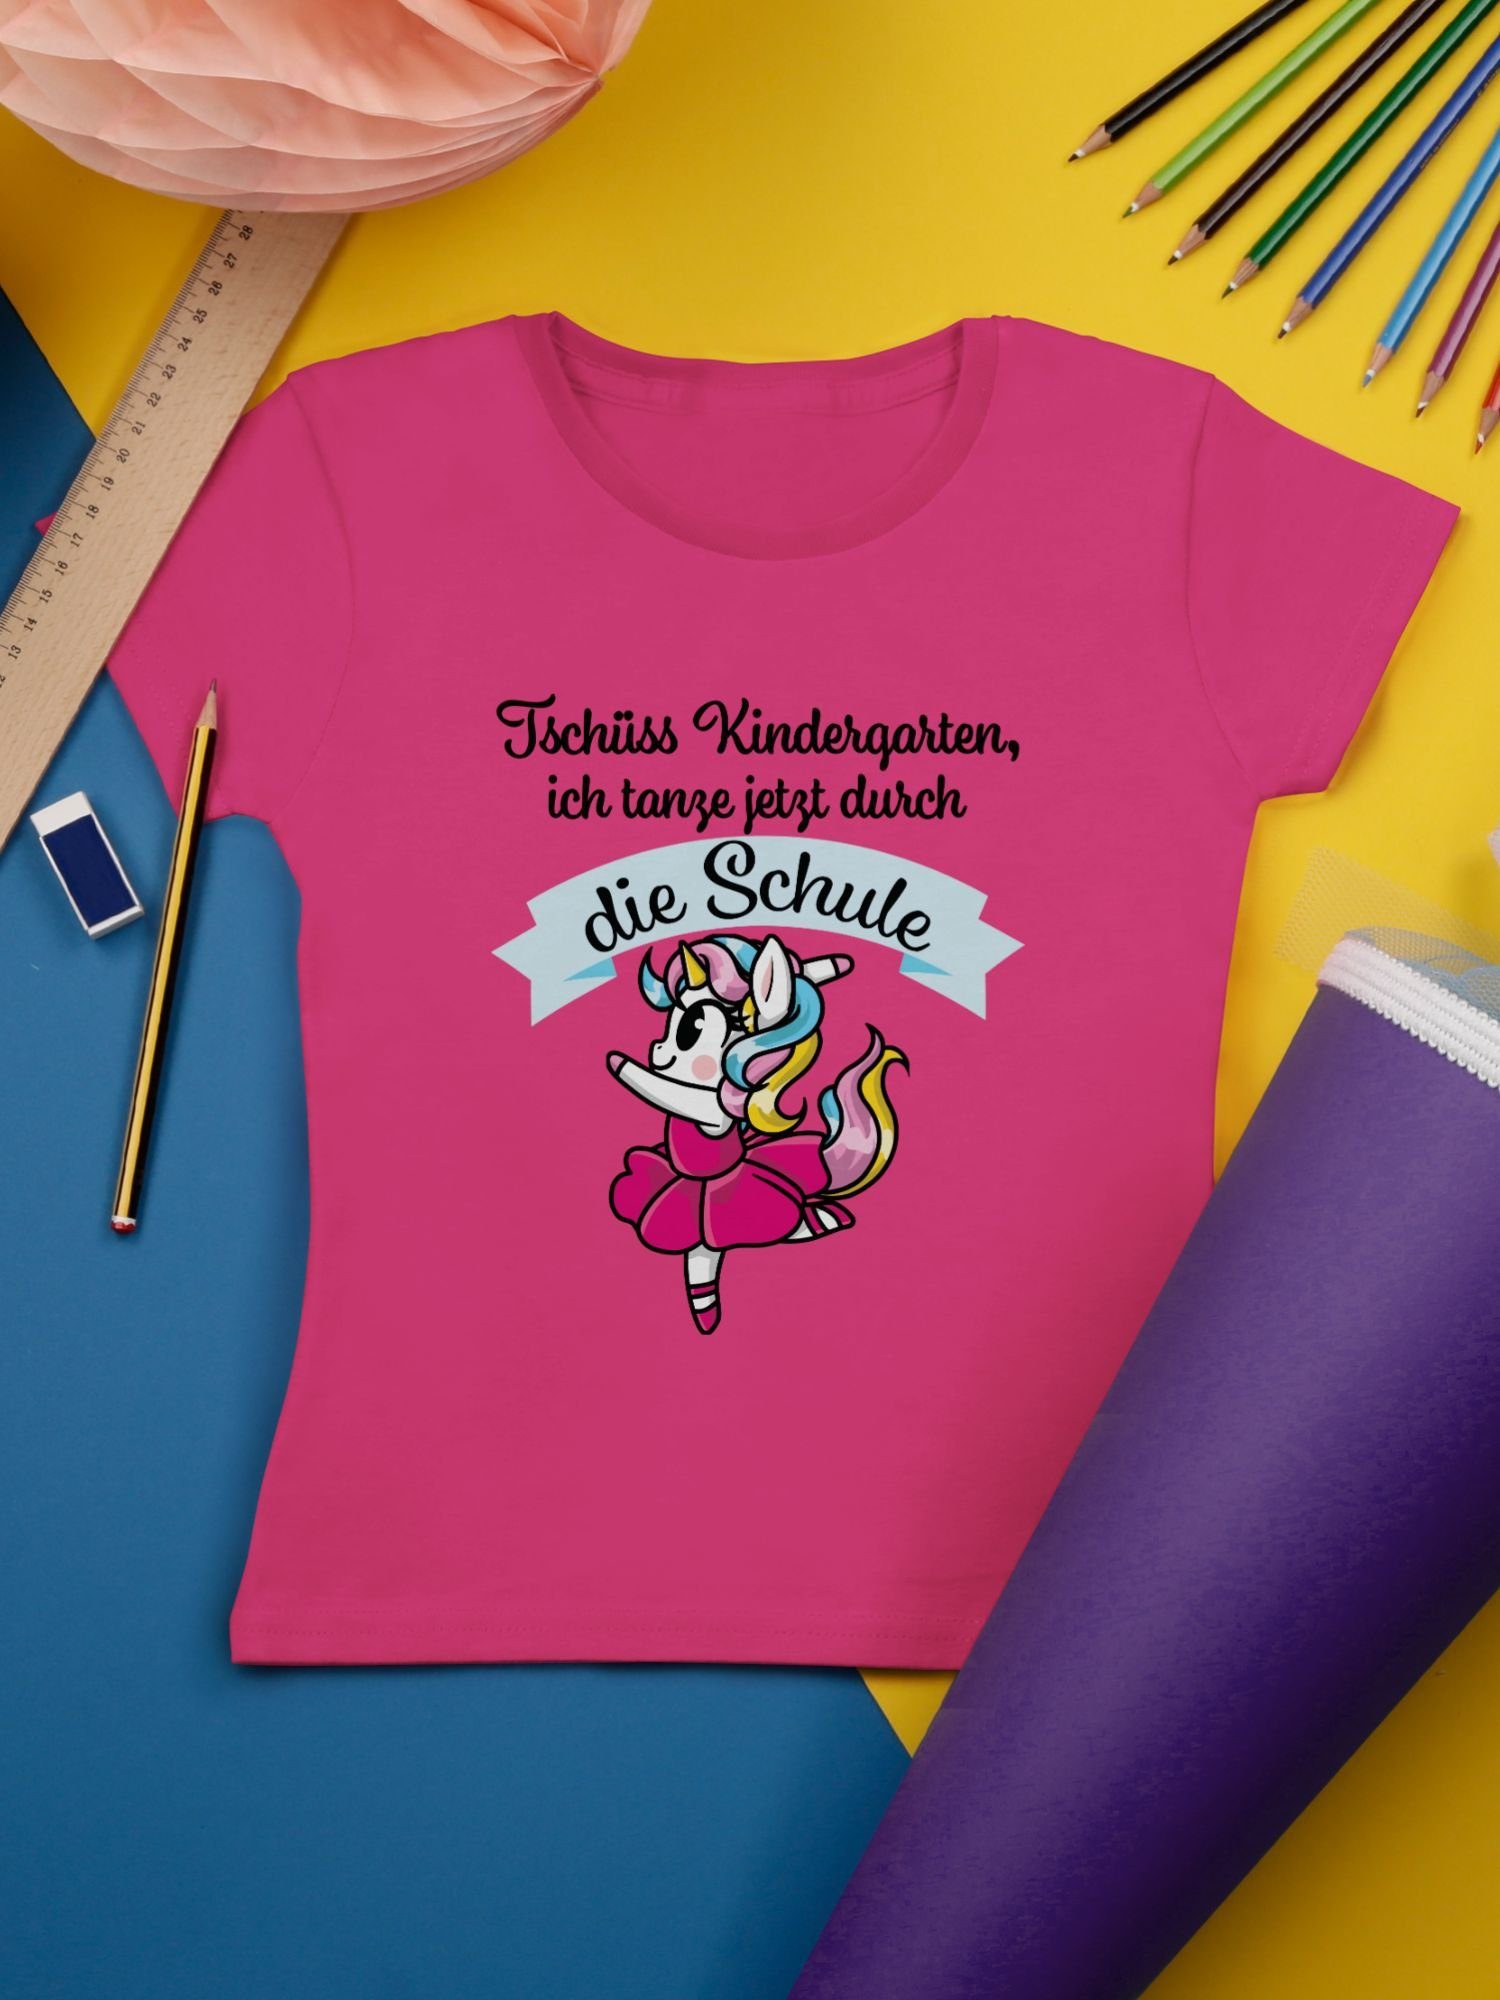 Einschulung Kindergarten Tschüss T-Shirt 1 Fuchsia durch Ballett tanze jetzt die ich Einhorn Shirtracer Mädchen Schule